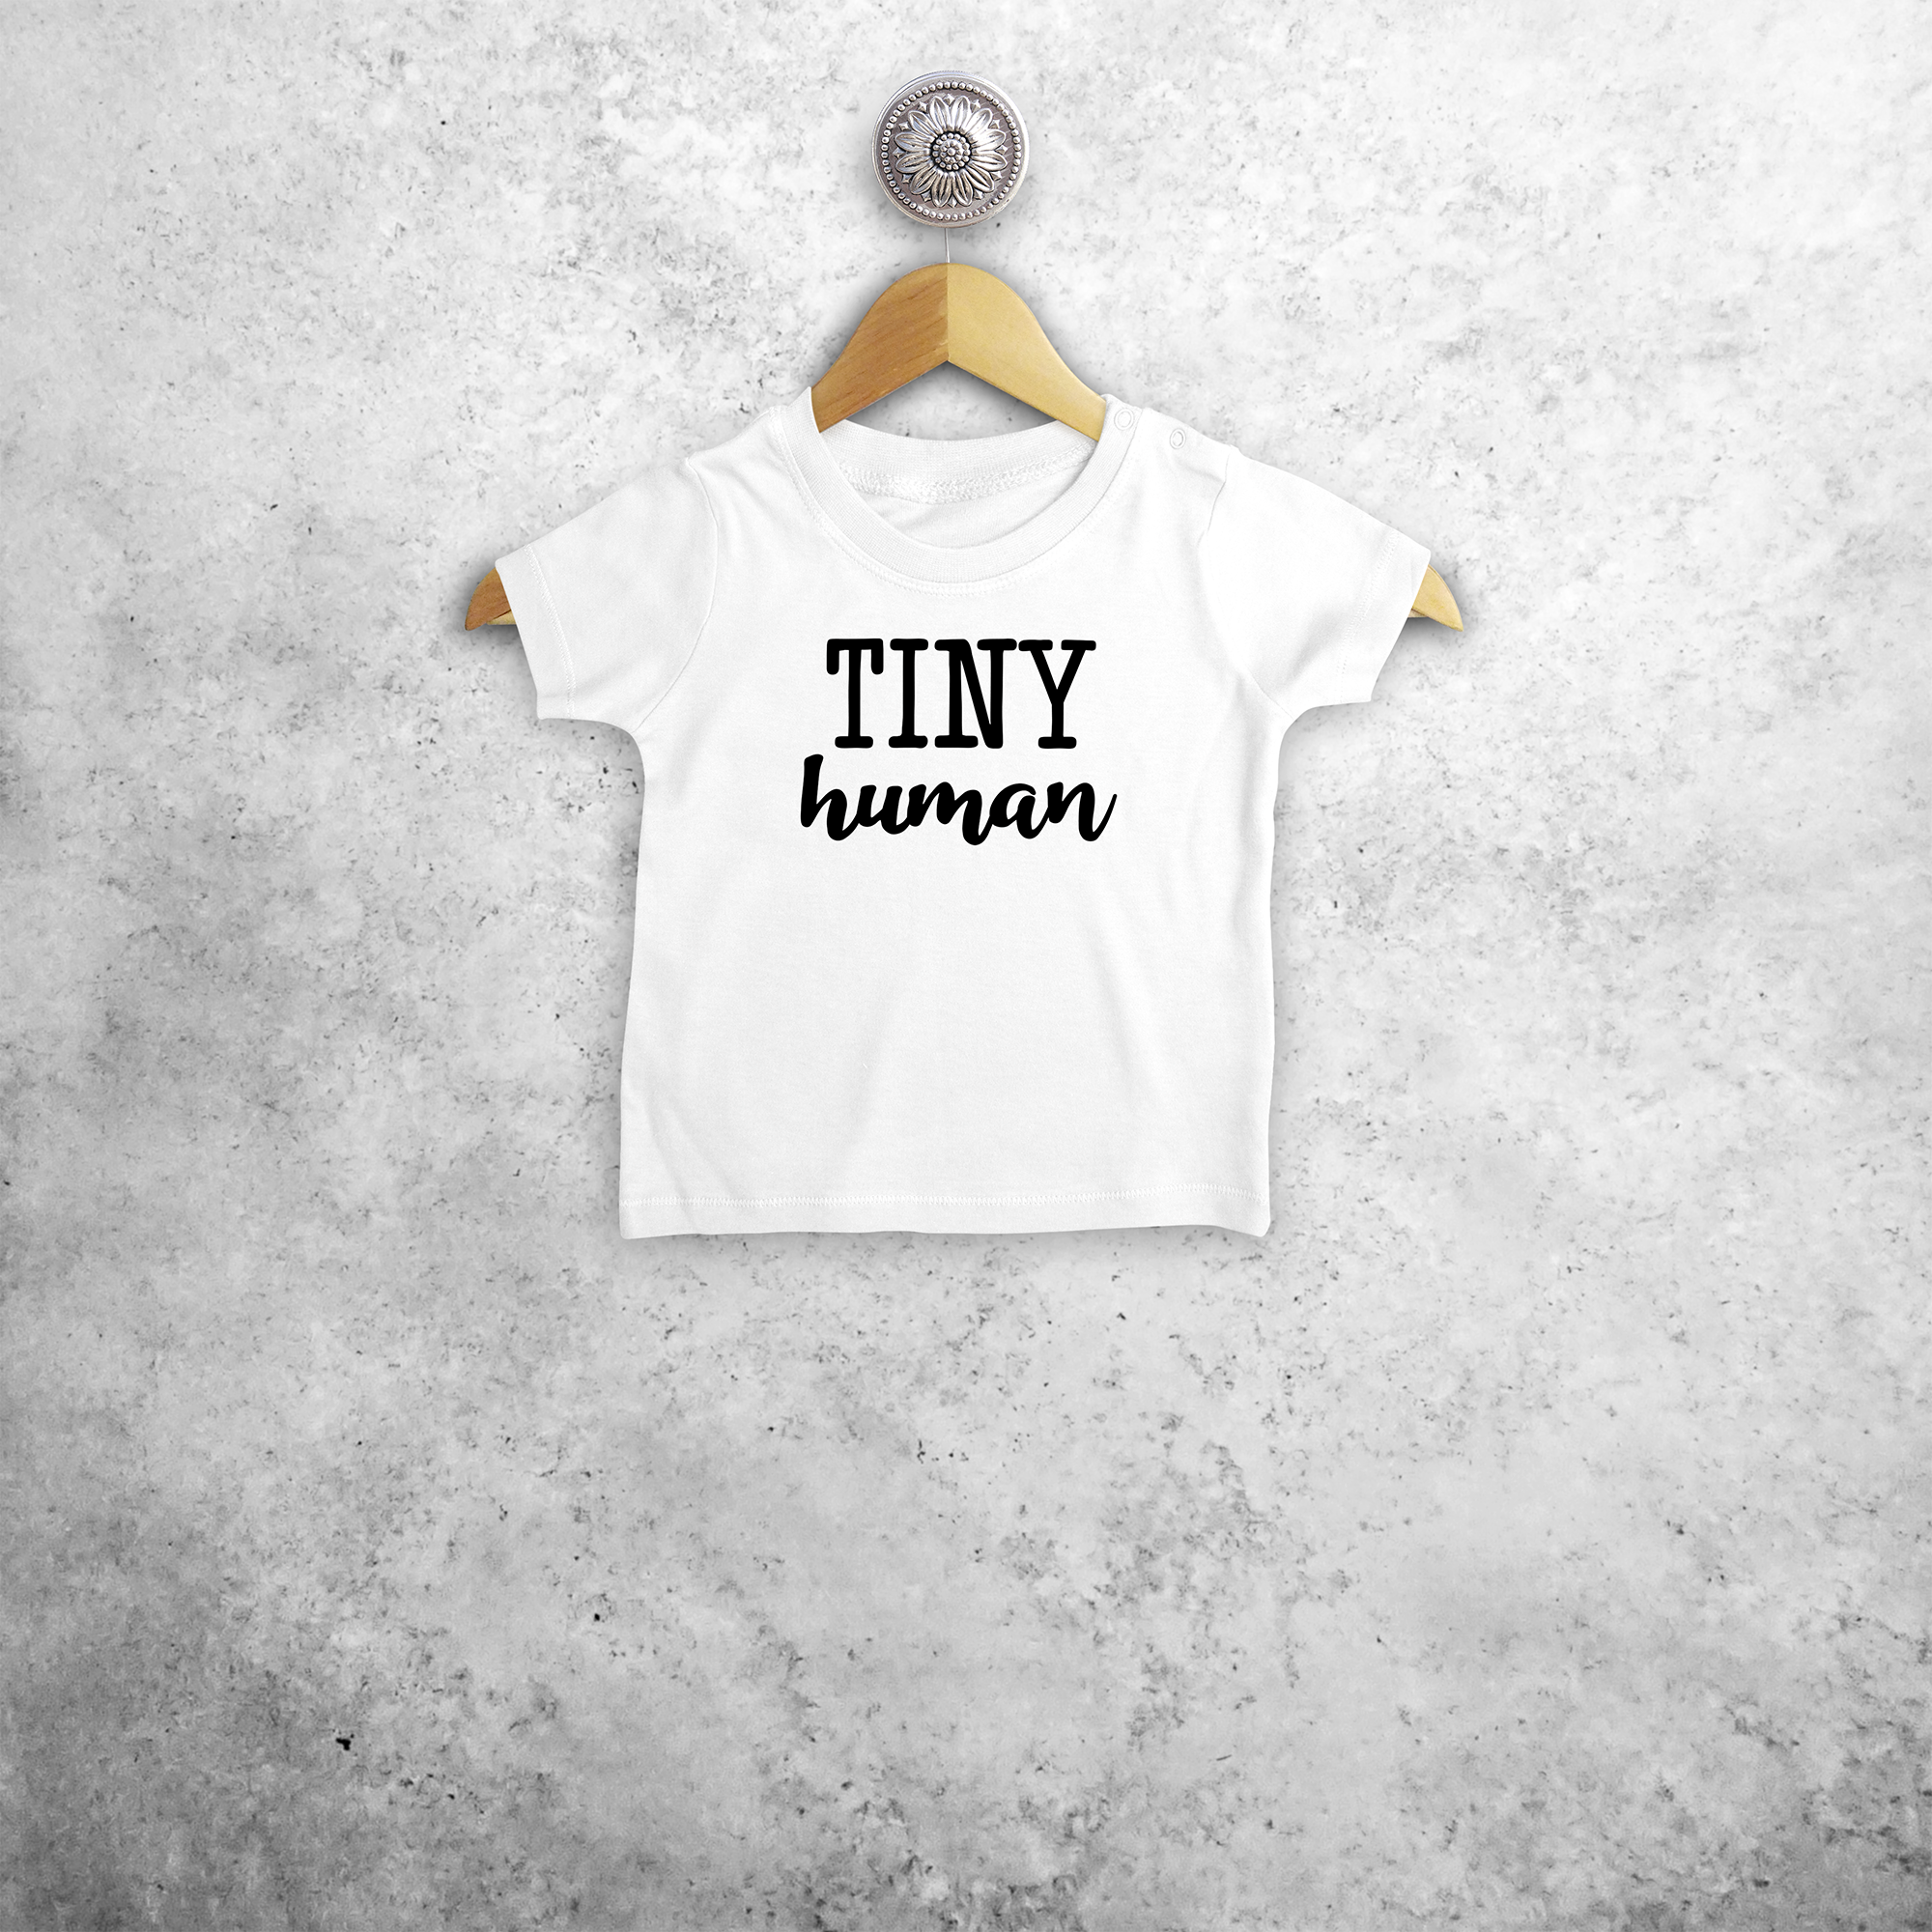 'Tiny human' baby shortsleeve shirt